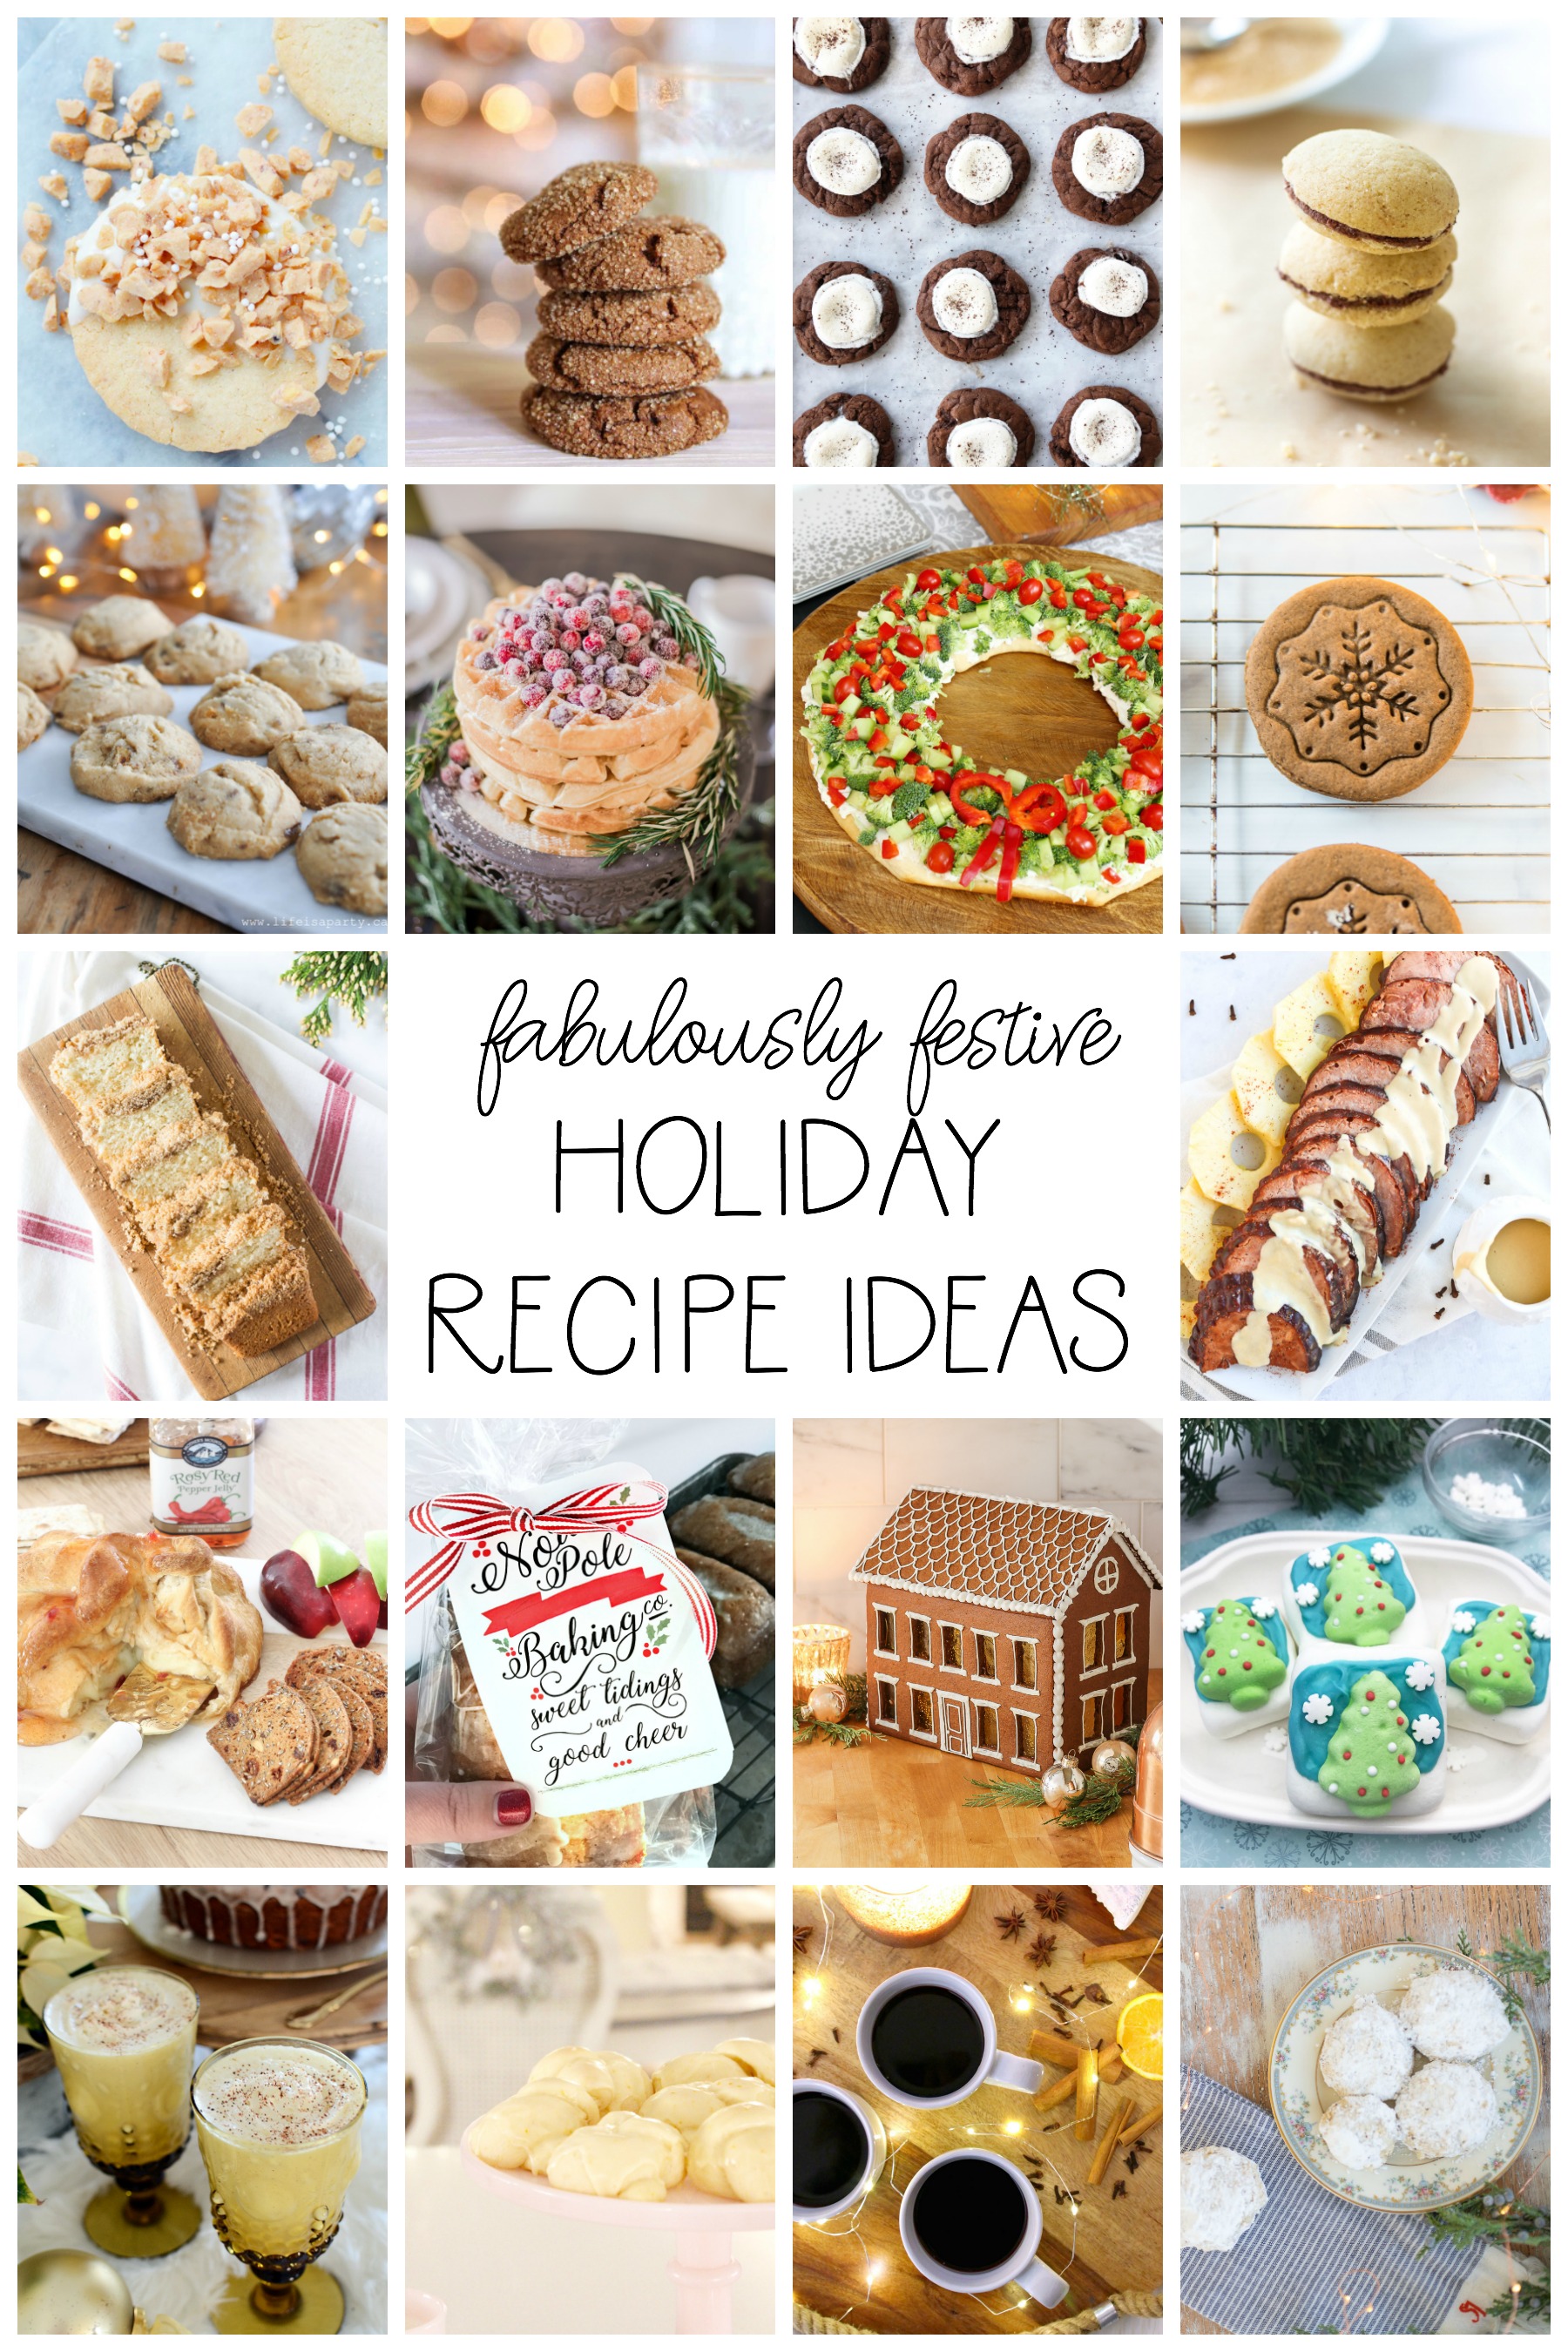 Fabulously festive holiday recipe ideas poster.